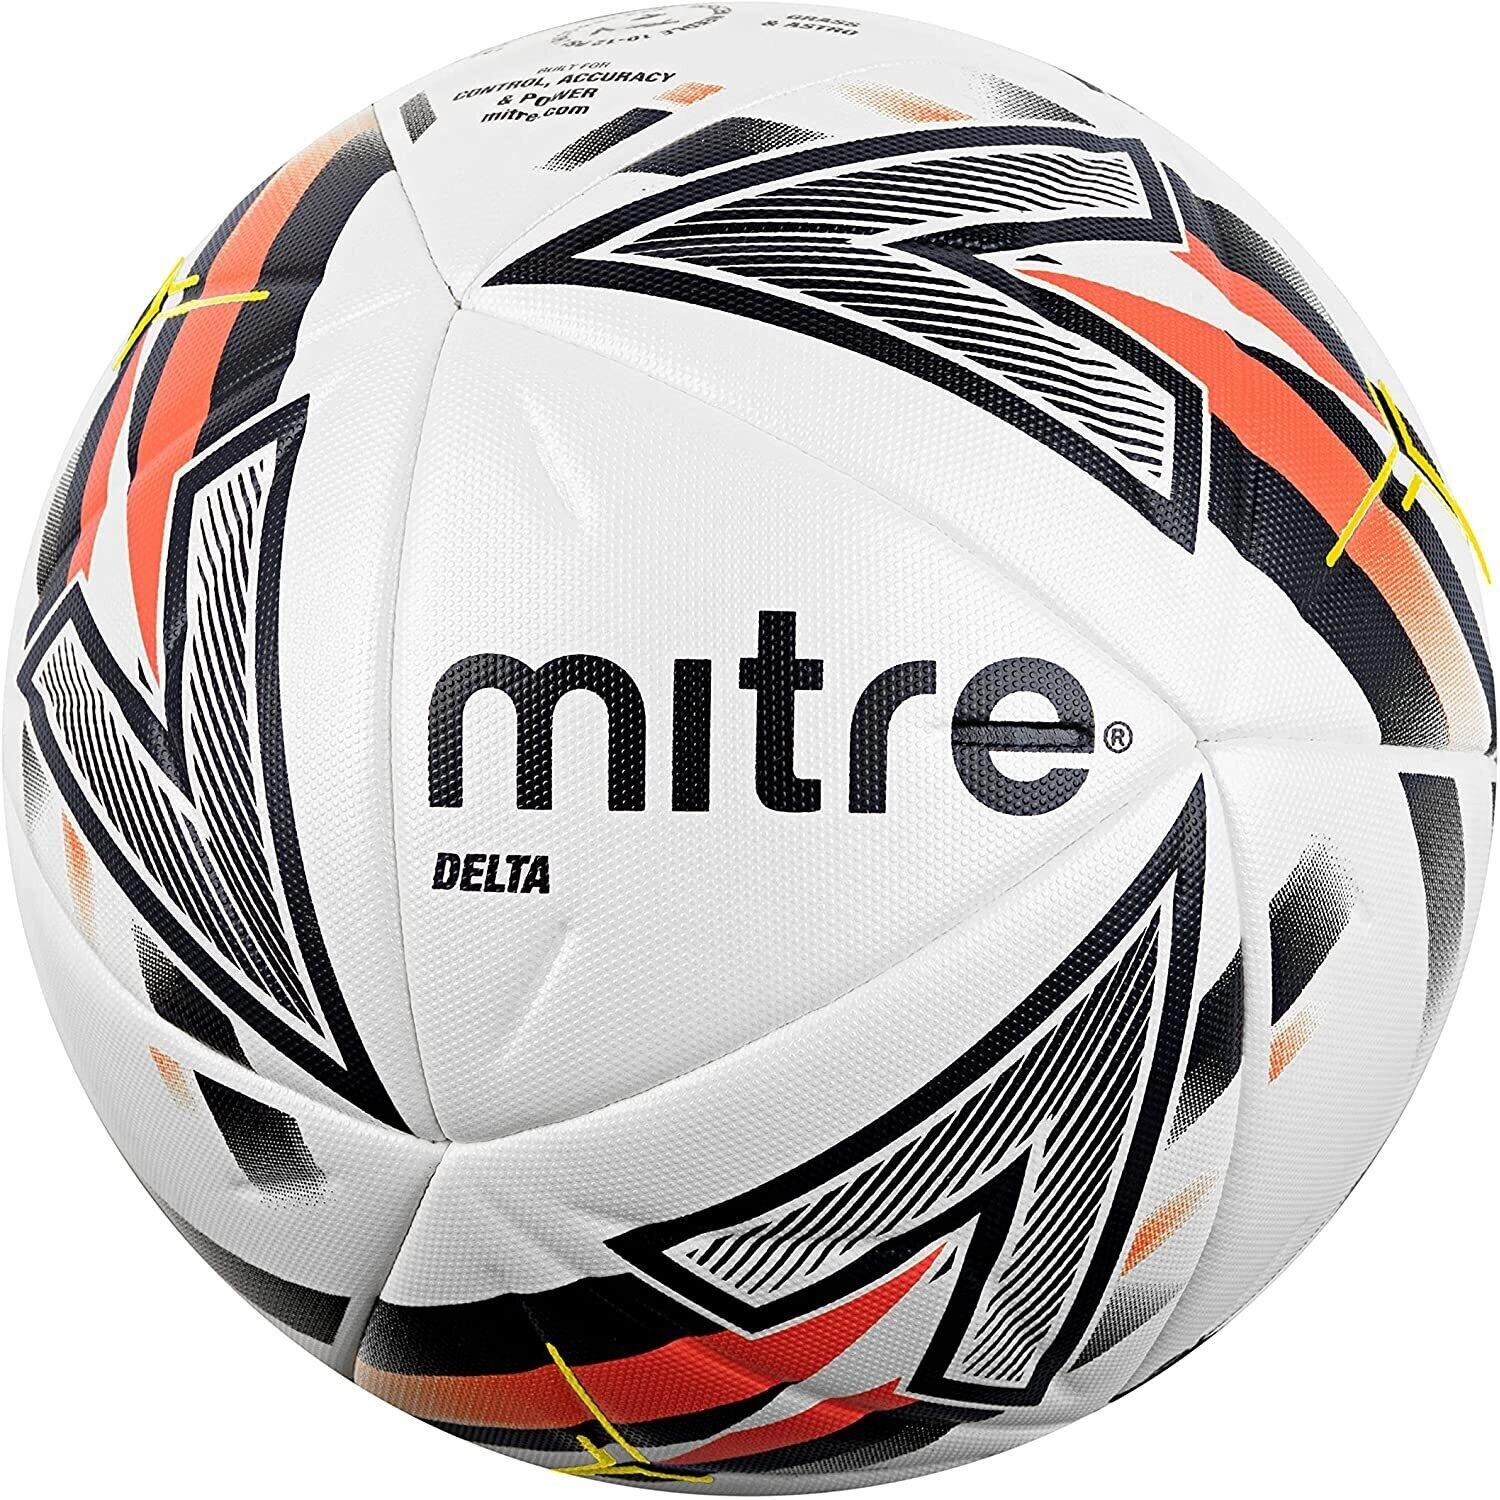 MITRE Delta One Match Football (White/Black/Orange)